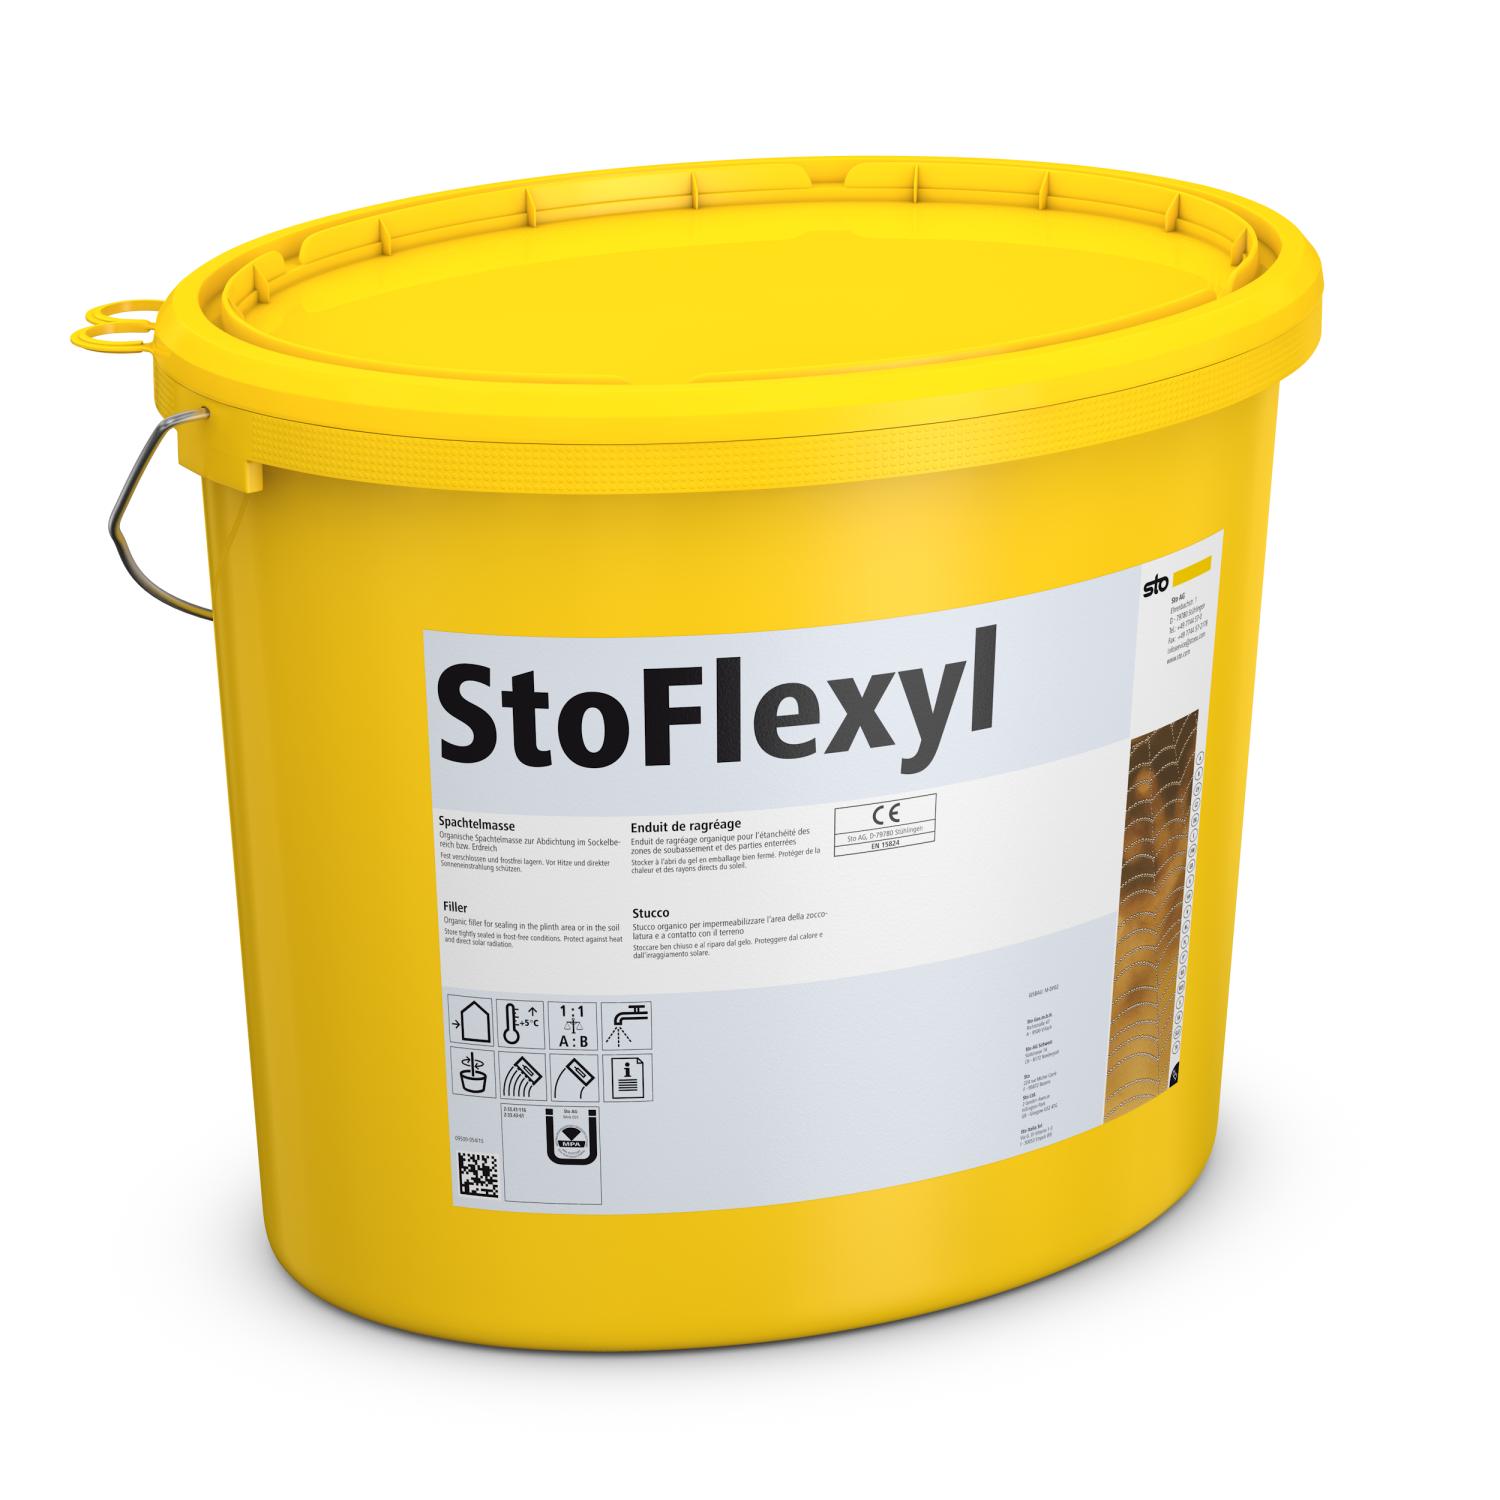 StoFlexyl